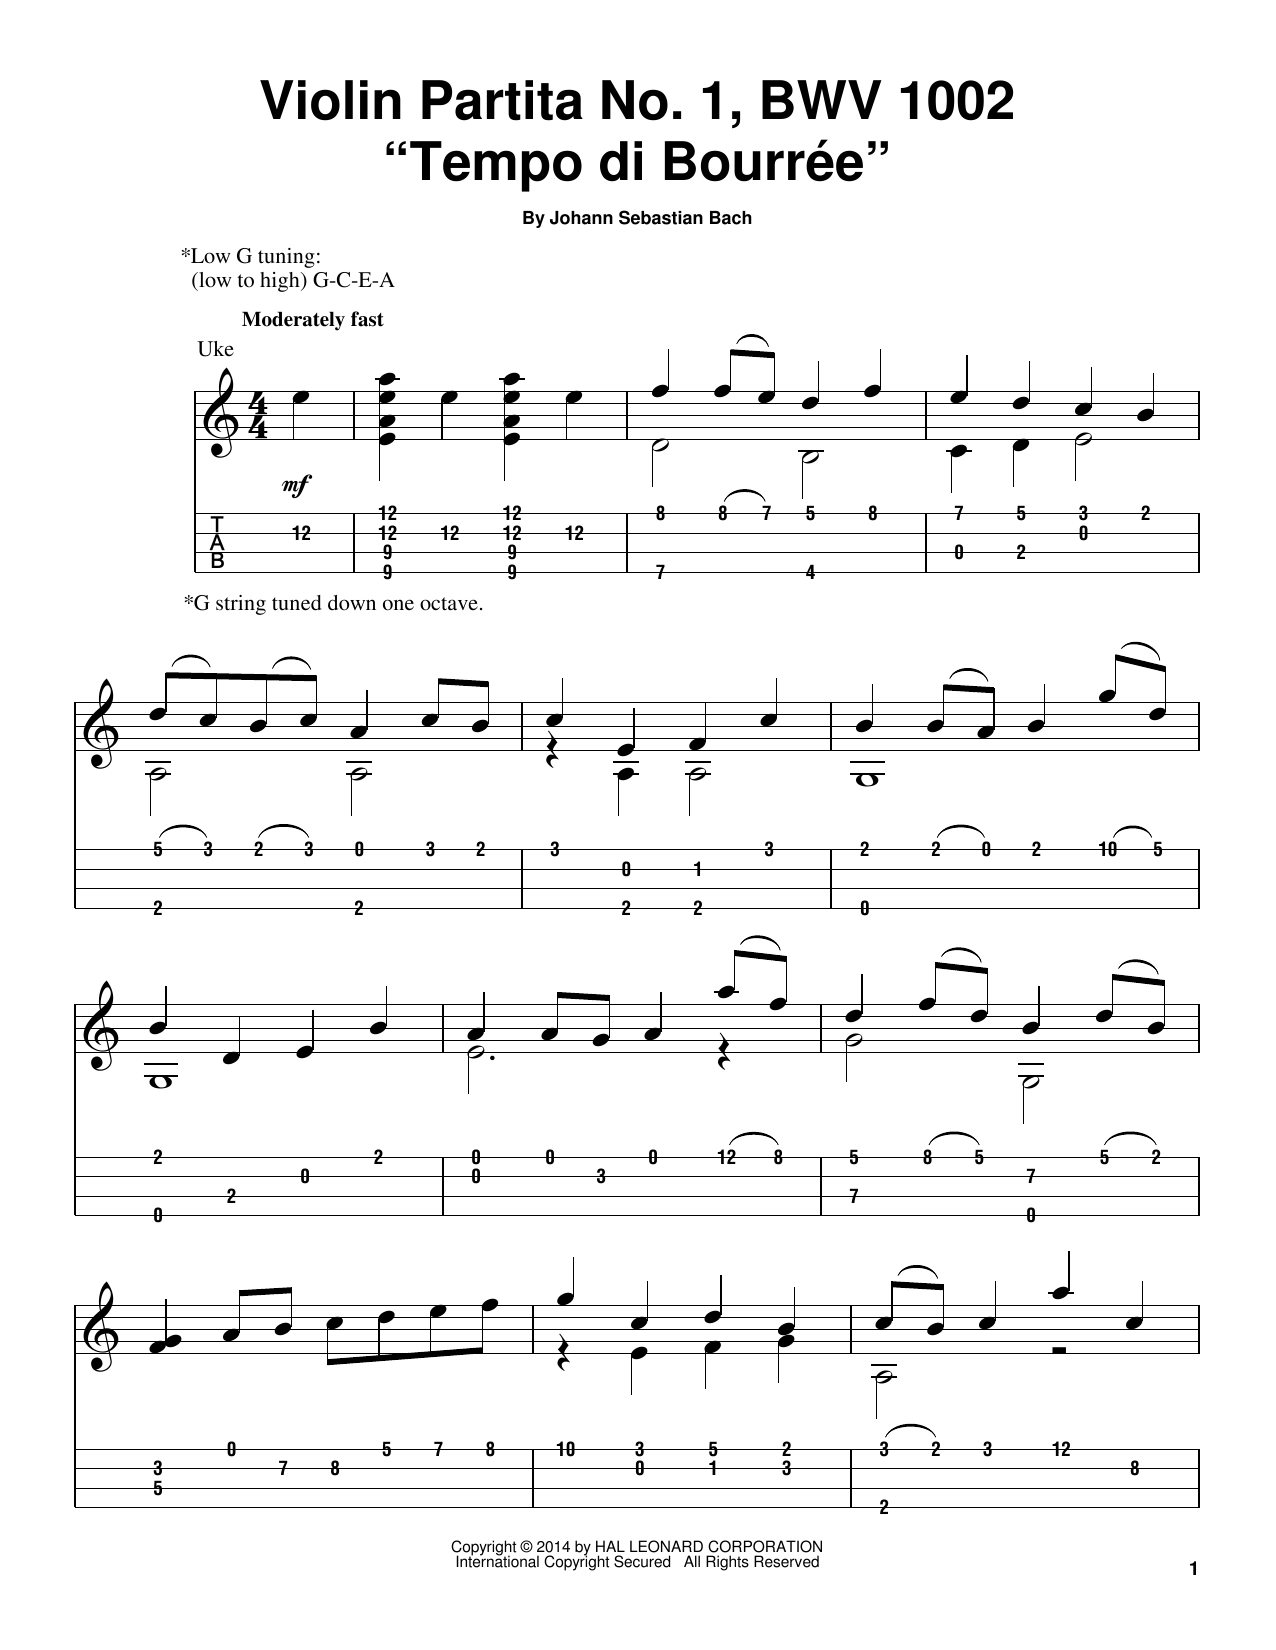 Johann Sebastian Bach Tempo Di Bourree, BWV 1002 Sheet Music Notes & Chords for Guitar Tab - Download or Print PDF